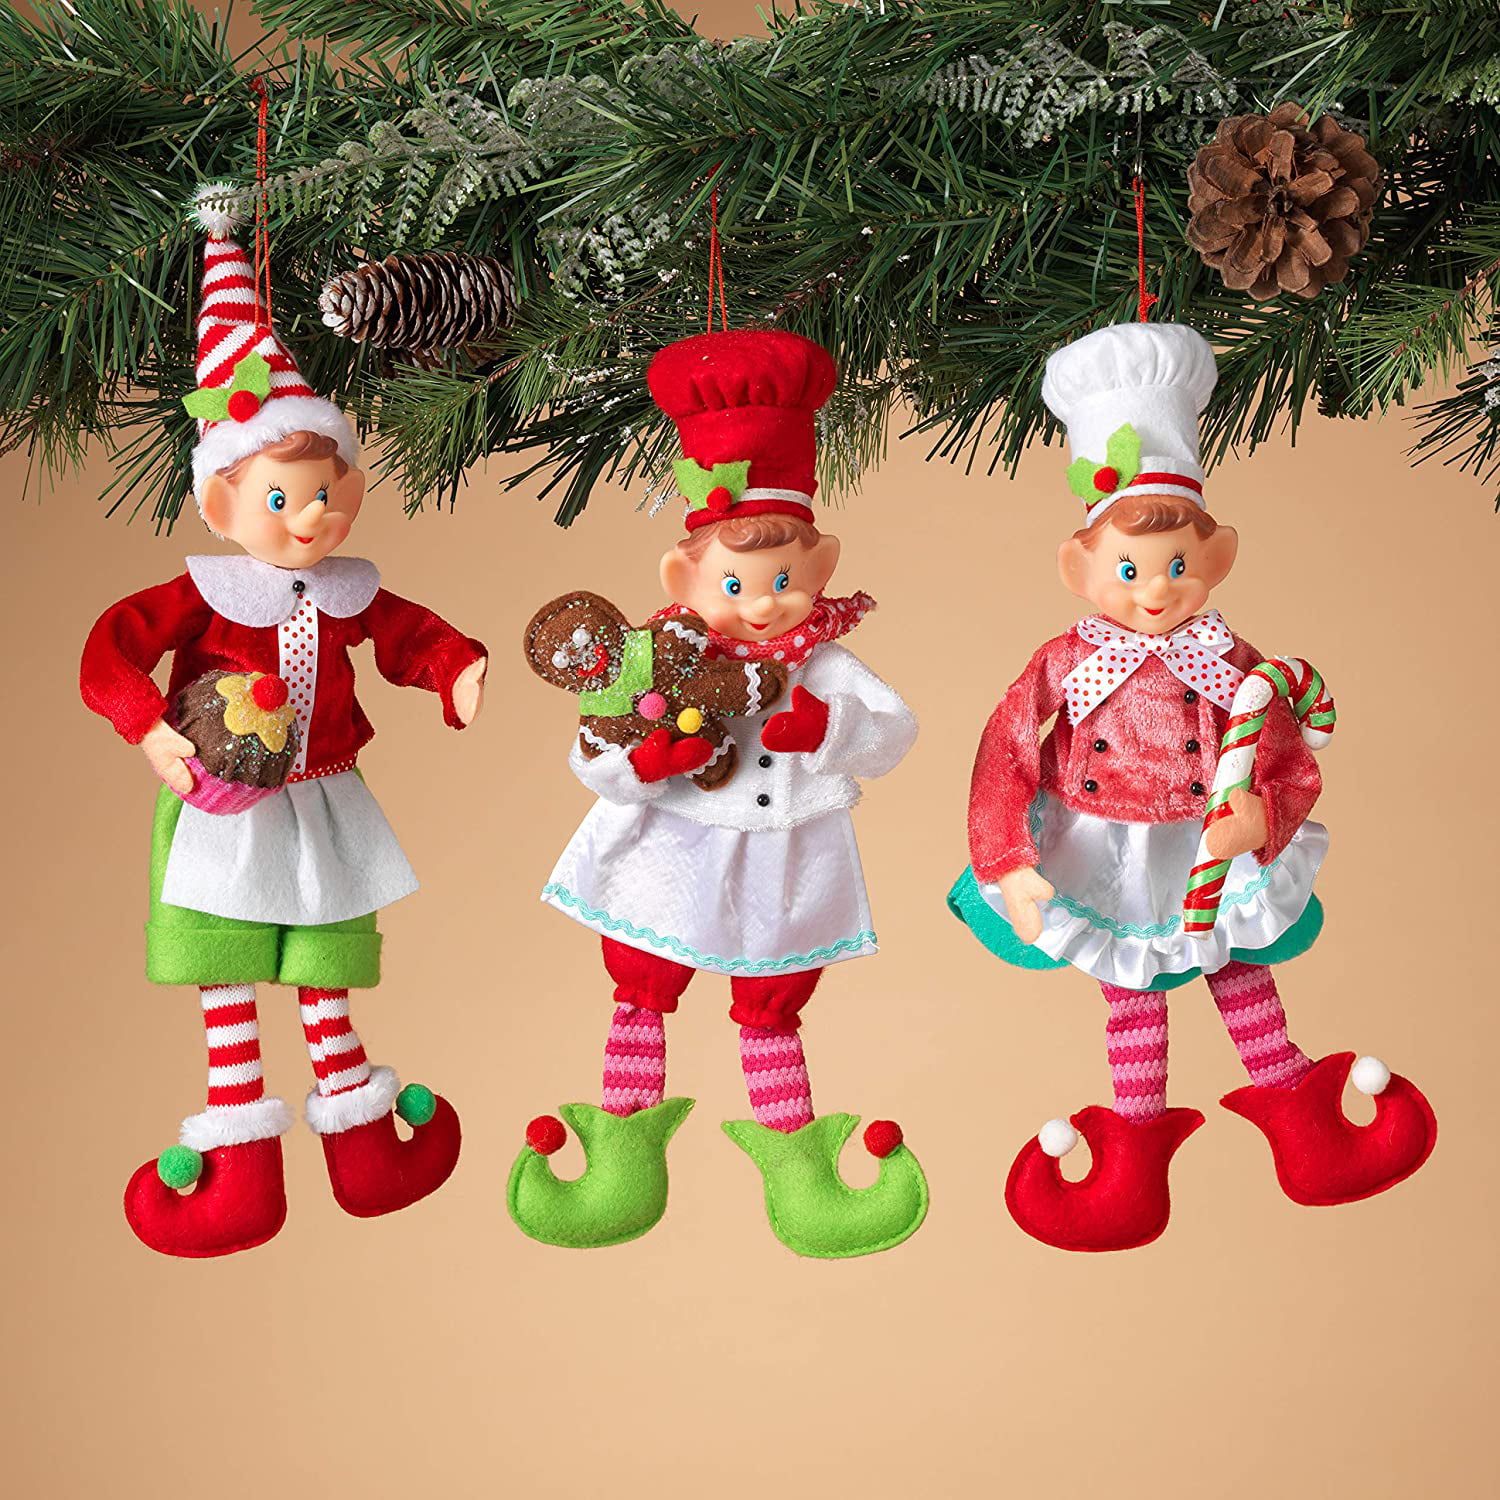 Felt Bendable Cupcake Elf Ornament Christmasr Decor 12 inches